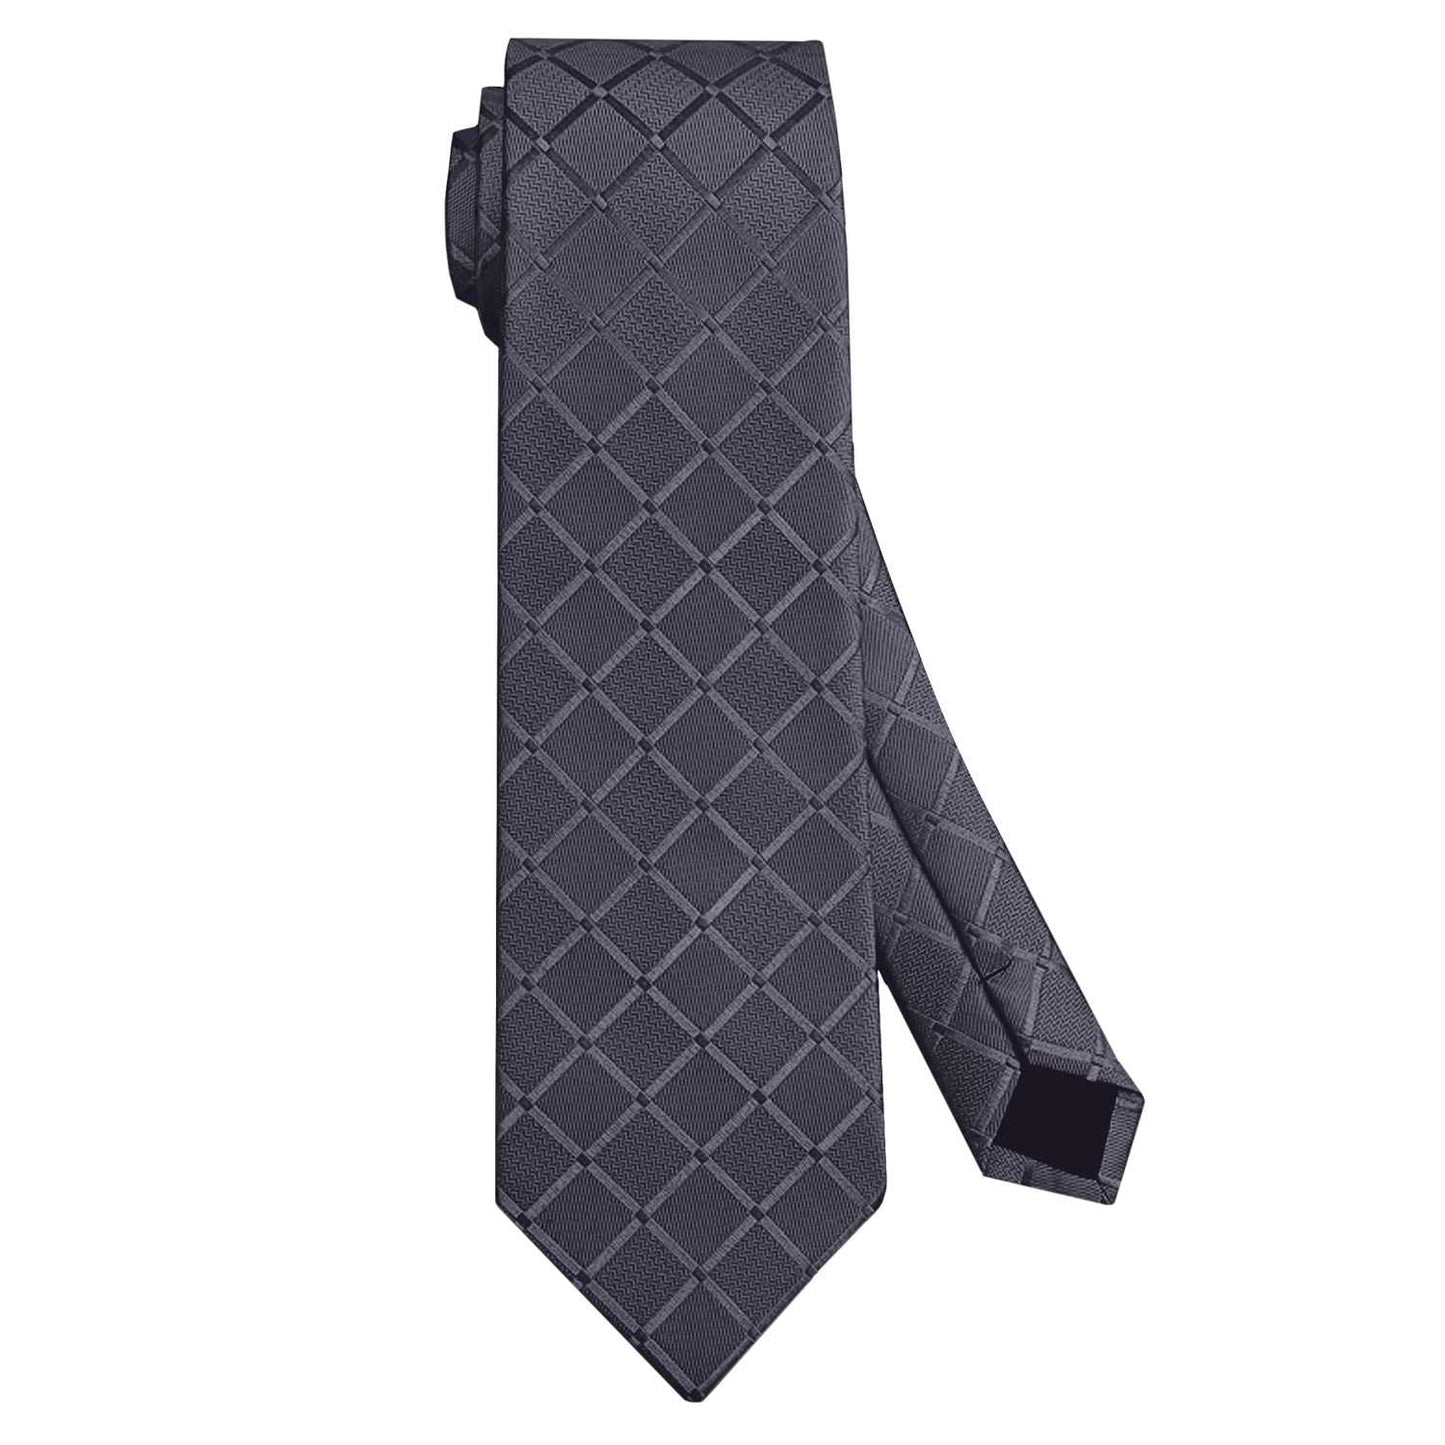 Corbata para Hombre, Conjunto de Corbata y Pañuelo de bolsillo, a Cuadros, Color Gris, Hecha a mano, Elegante